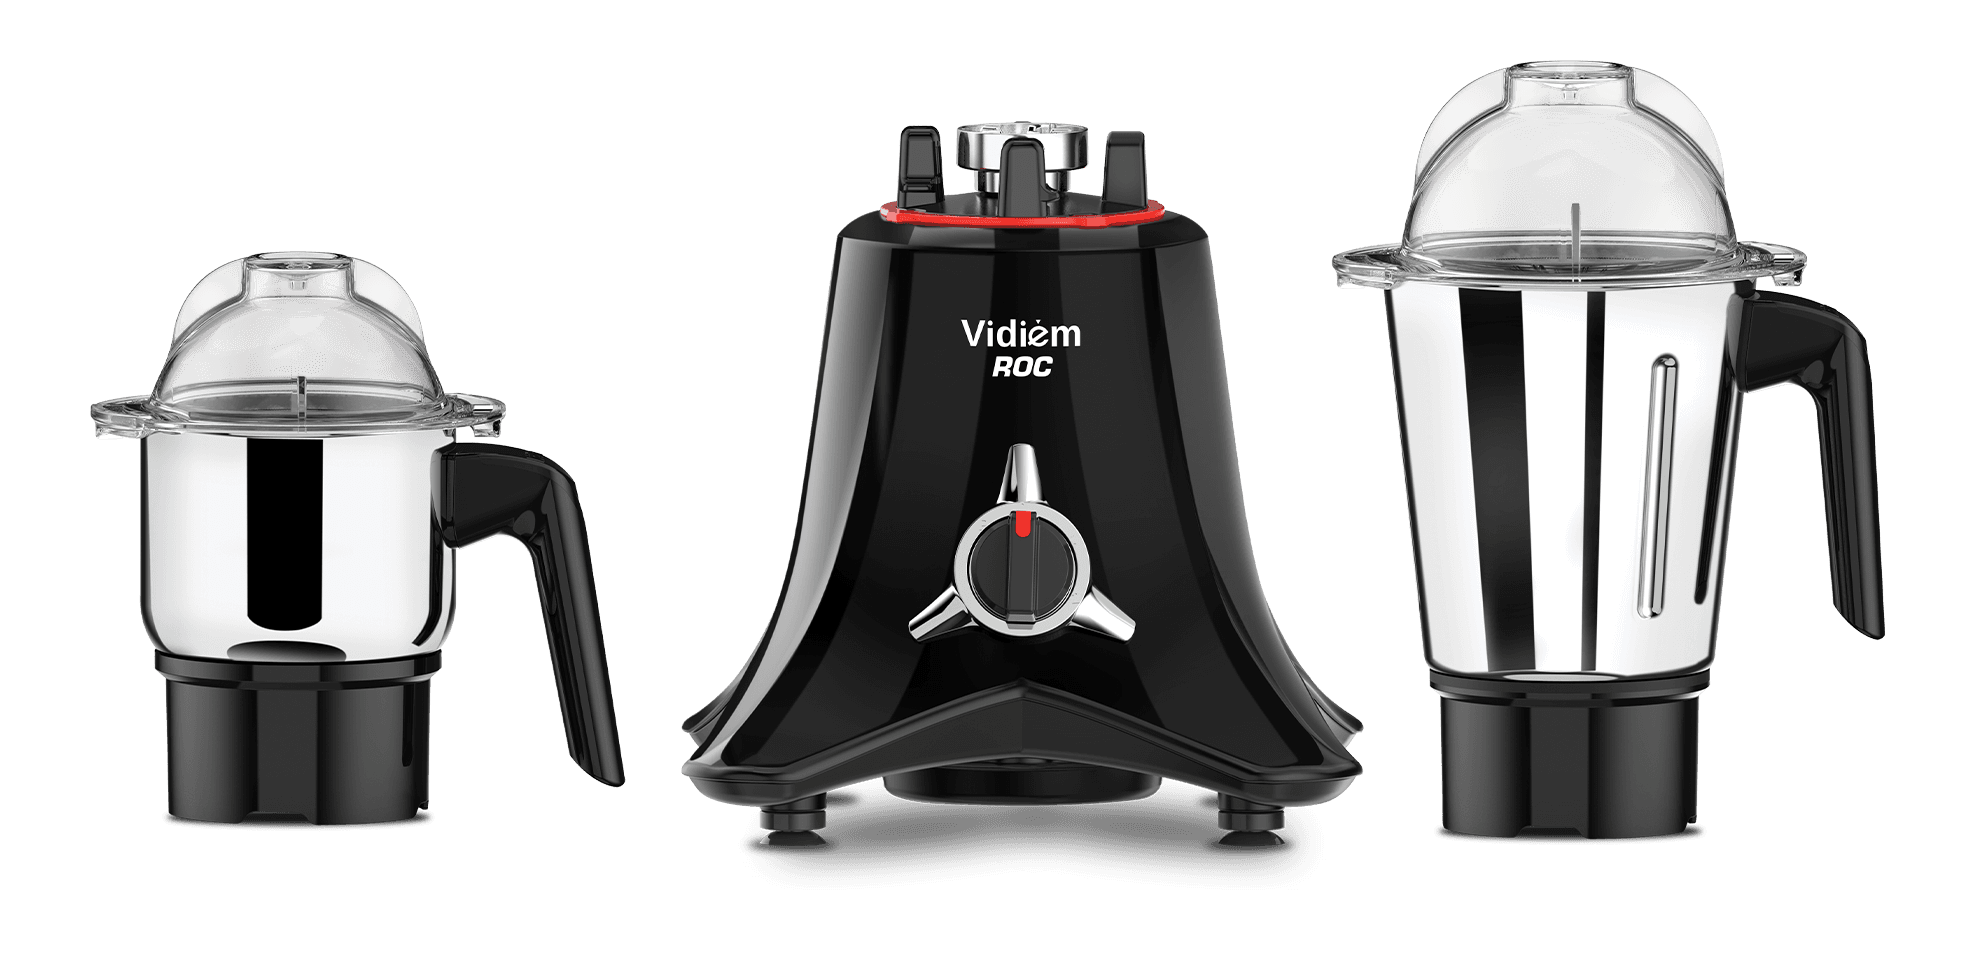 Vidiem Mixer Grinder 566 A ROC (Black) | Mixie grinder 1500 watt+ 2 Leakproof Jars with self-lock for wet & dry spices, chutneys & curries | 1 Year Warranty | mixer grinder